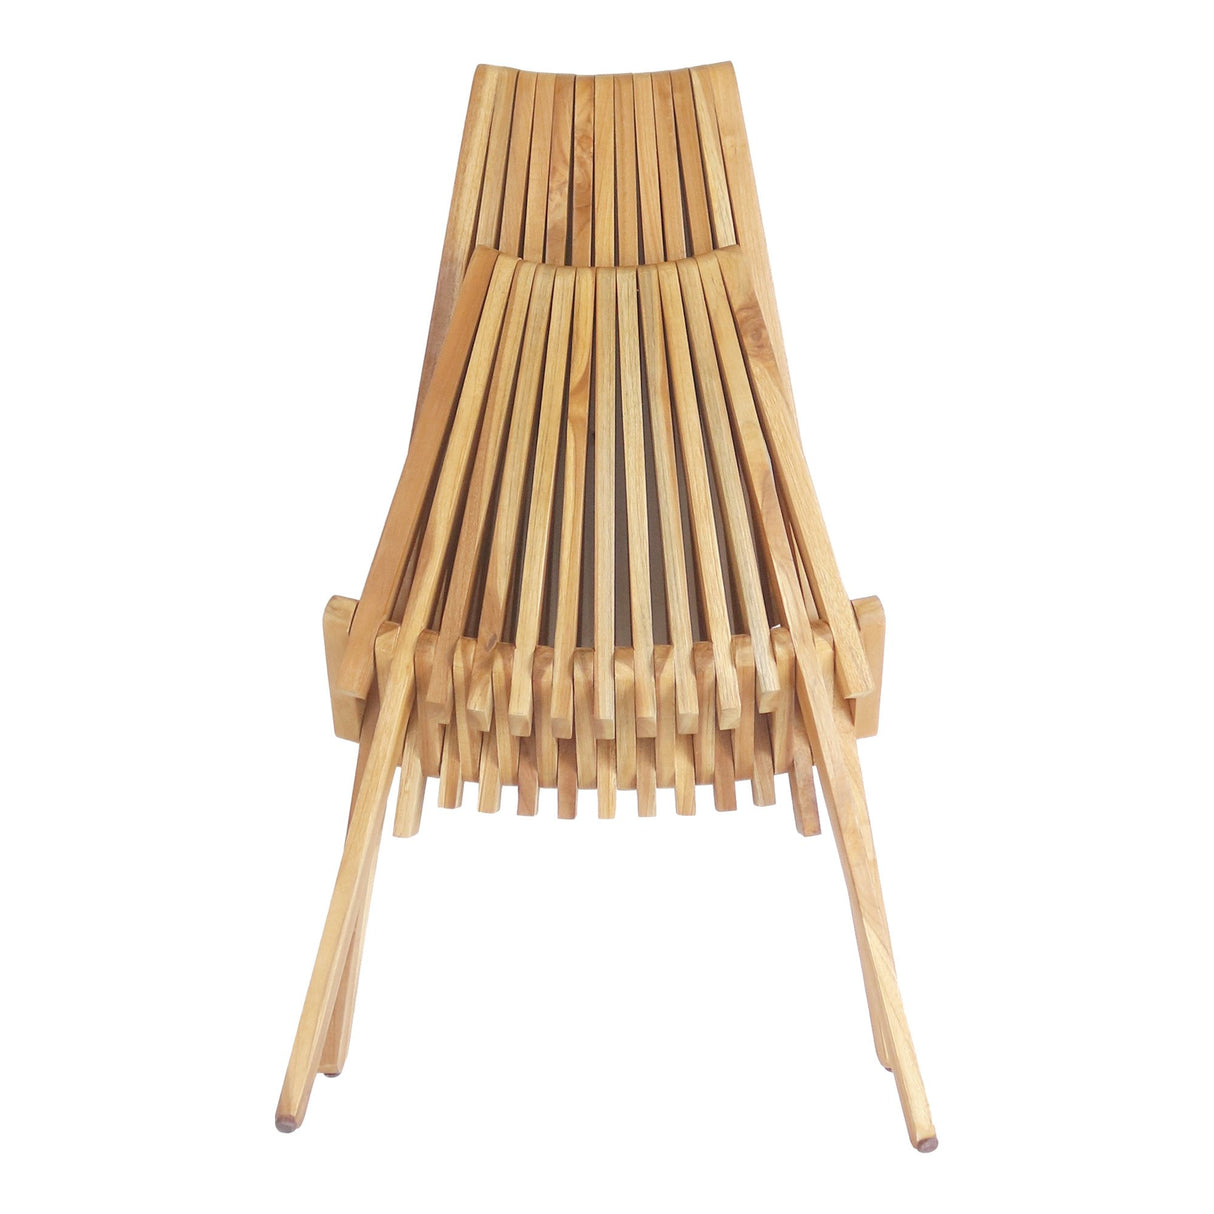 Scaun pliabil Calero din lemn de tec natural House Nordic